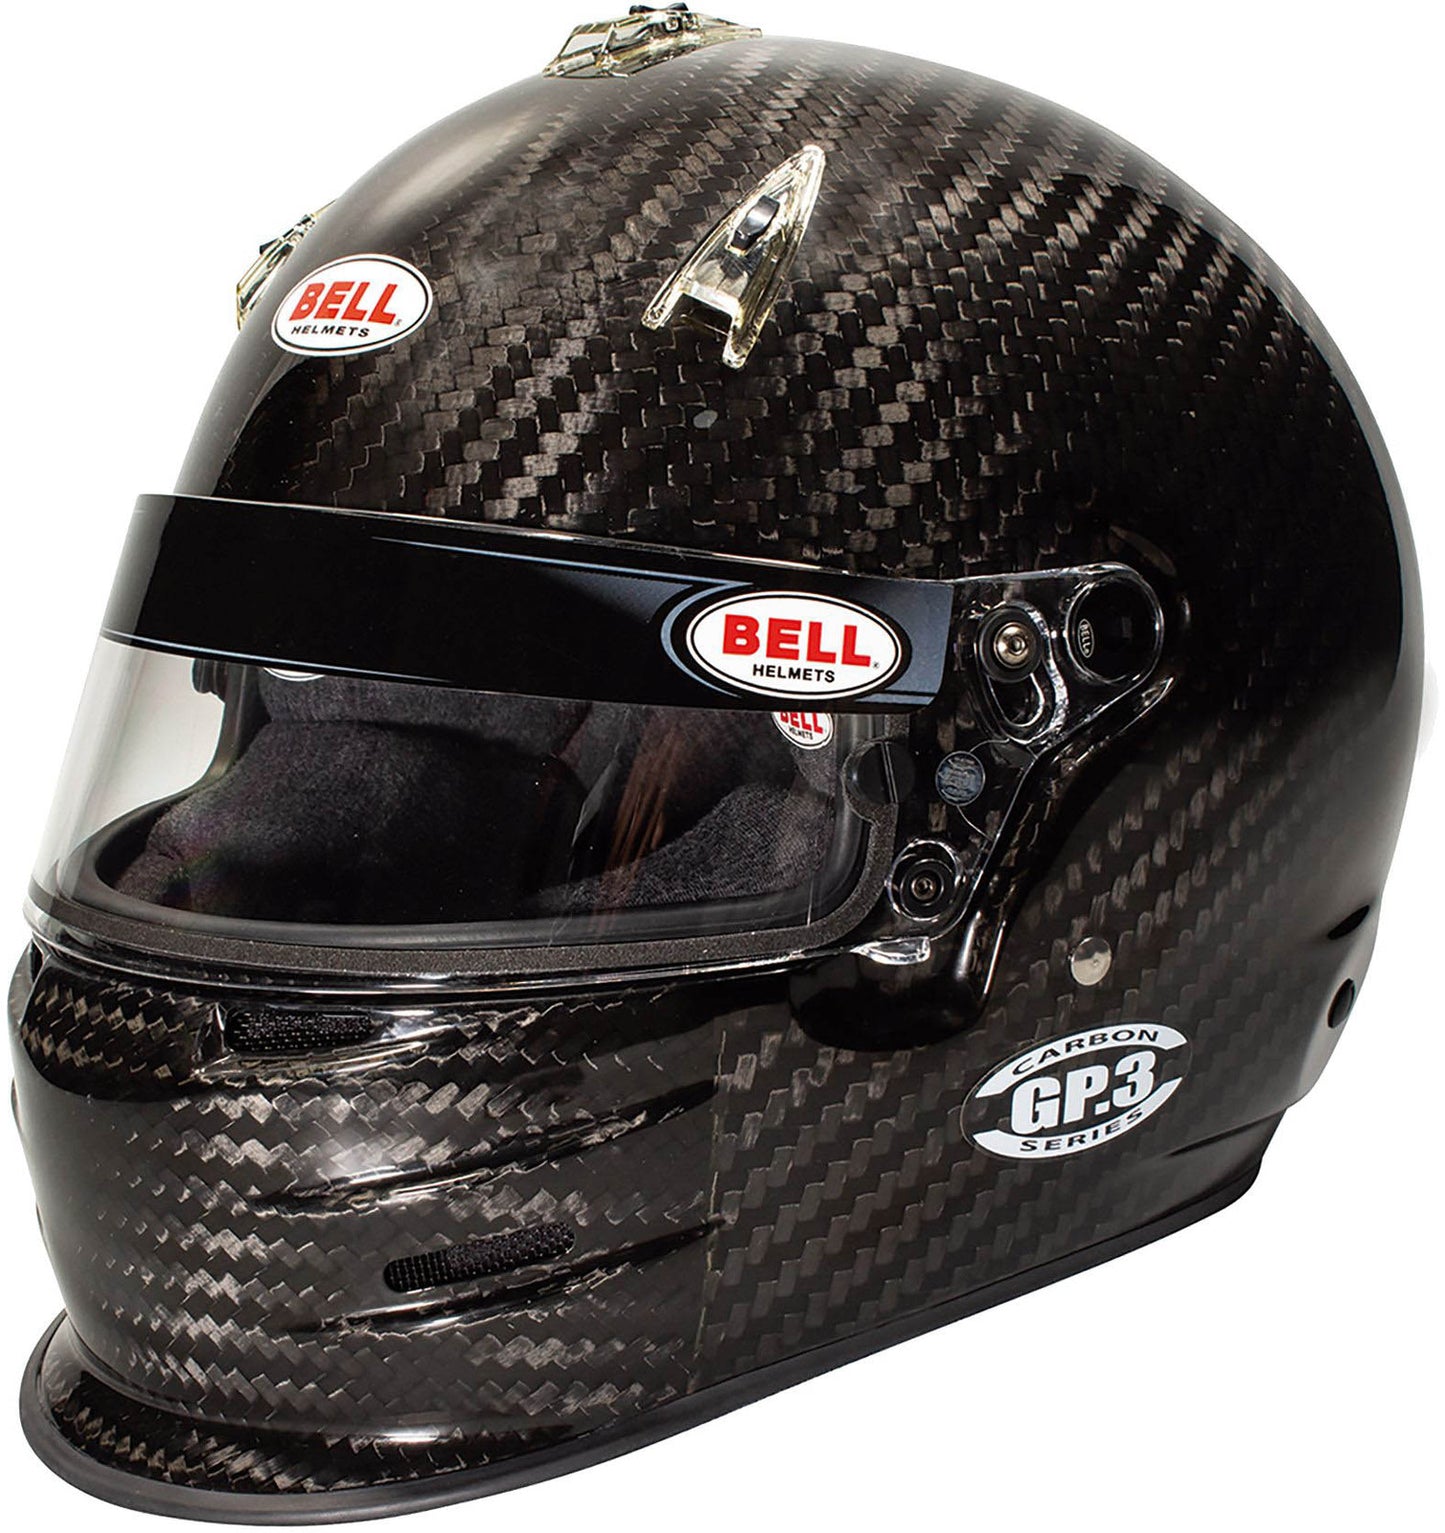 Bell GP3 Carbon Helmet (SA2020)